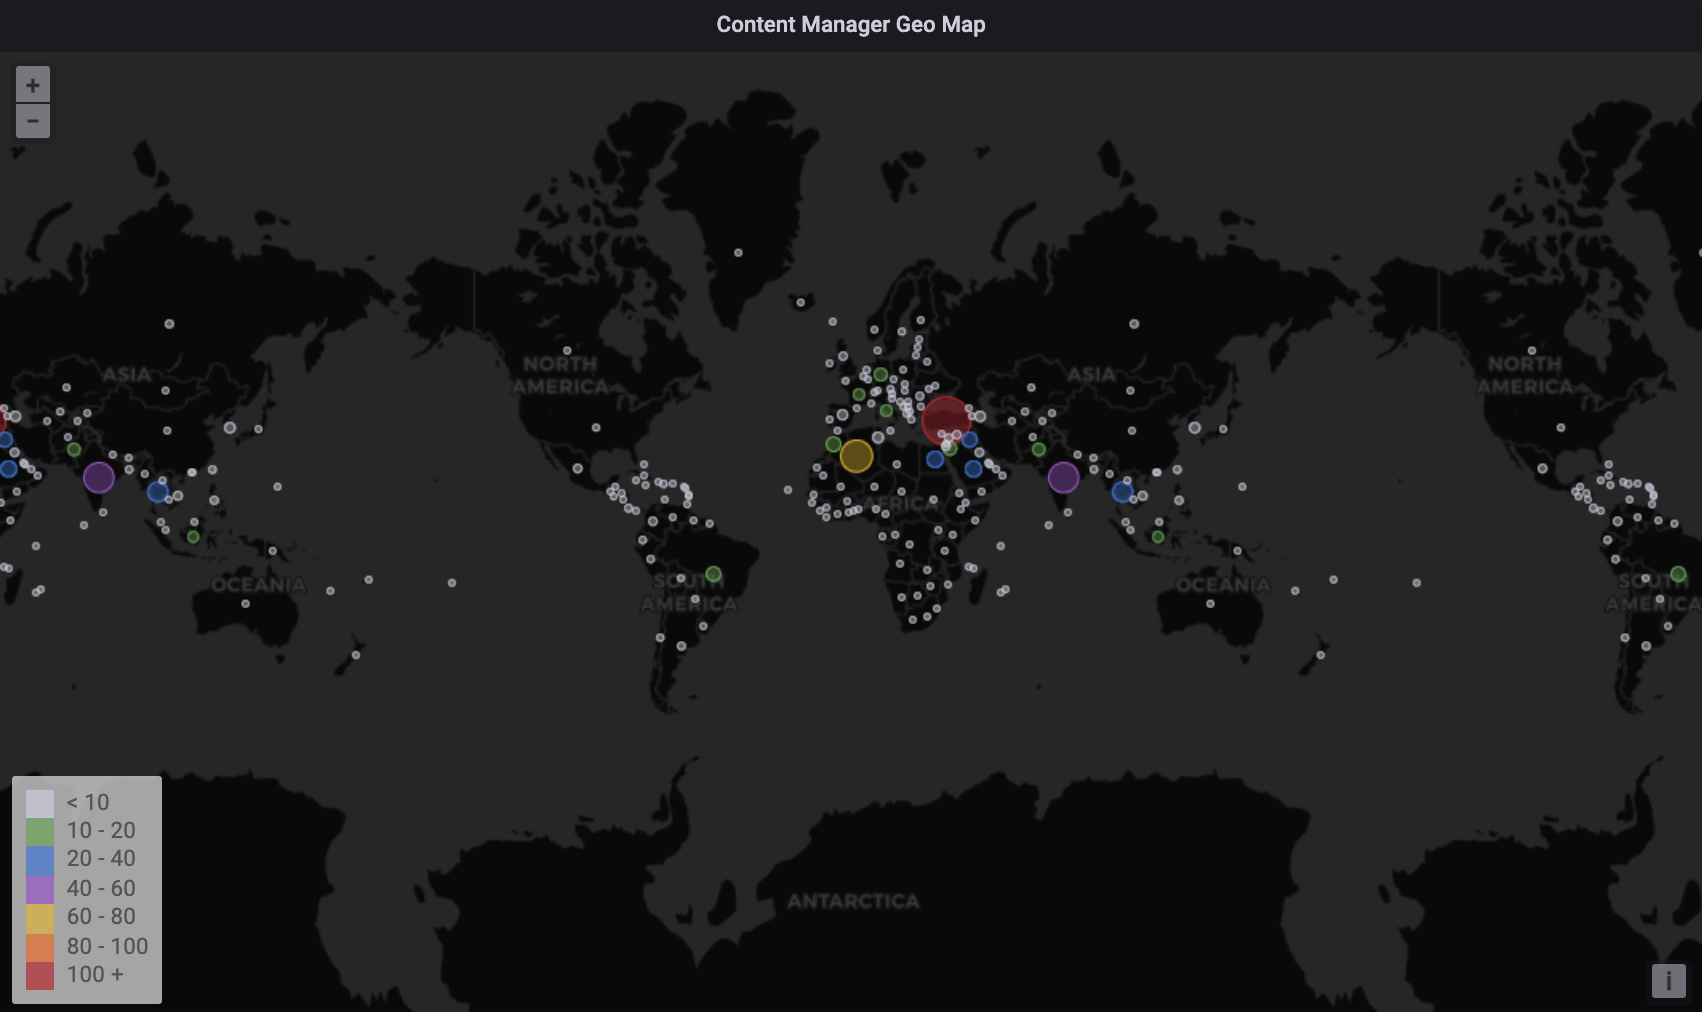 Media Management System Geo Map